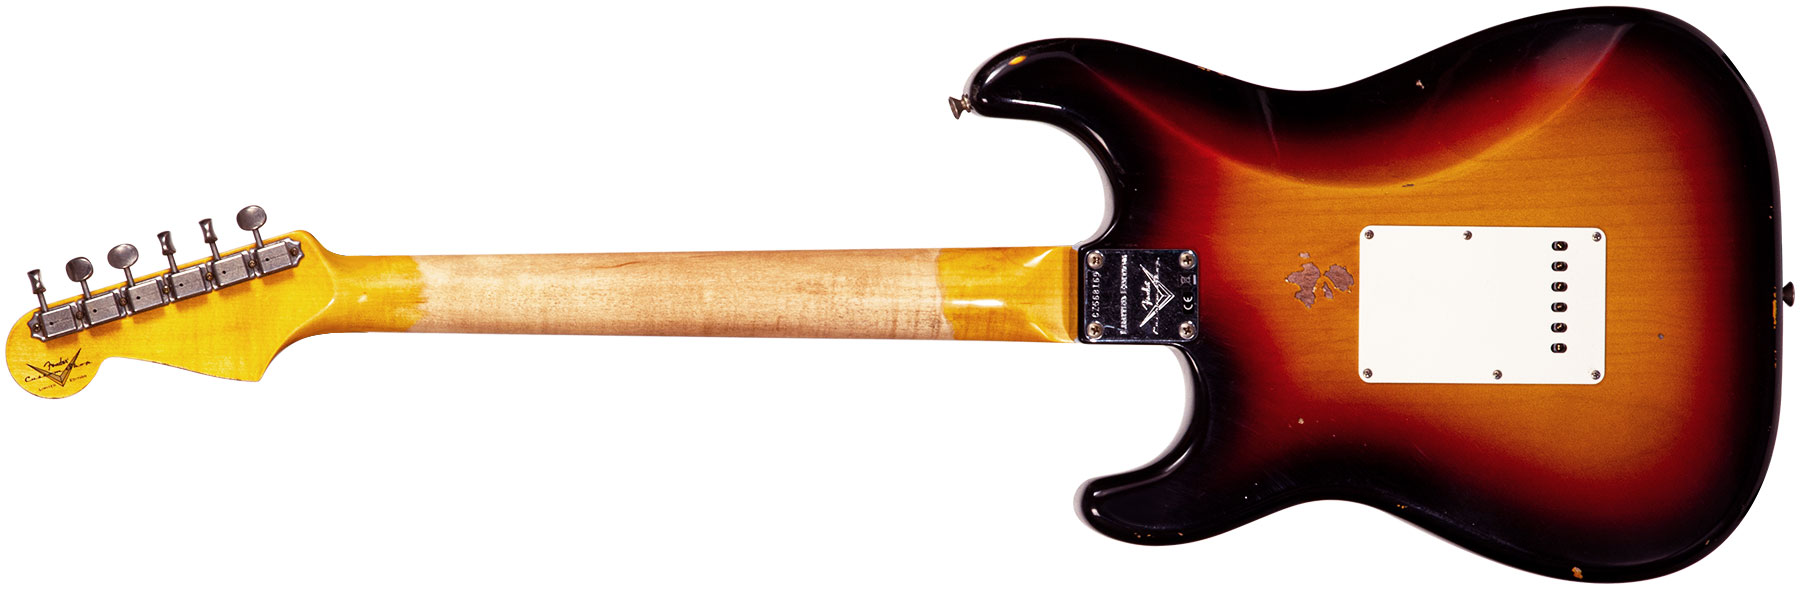 Fender Custom Shop Strat Late 64 3s Trem Rw #cz568169 - Relic Target 3-color Sunburst - Guitarra eléctrica con forma de str. - Variation 1